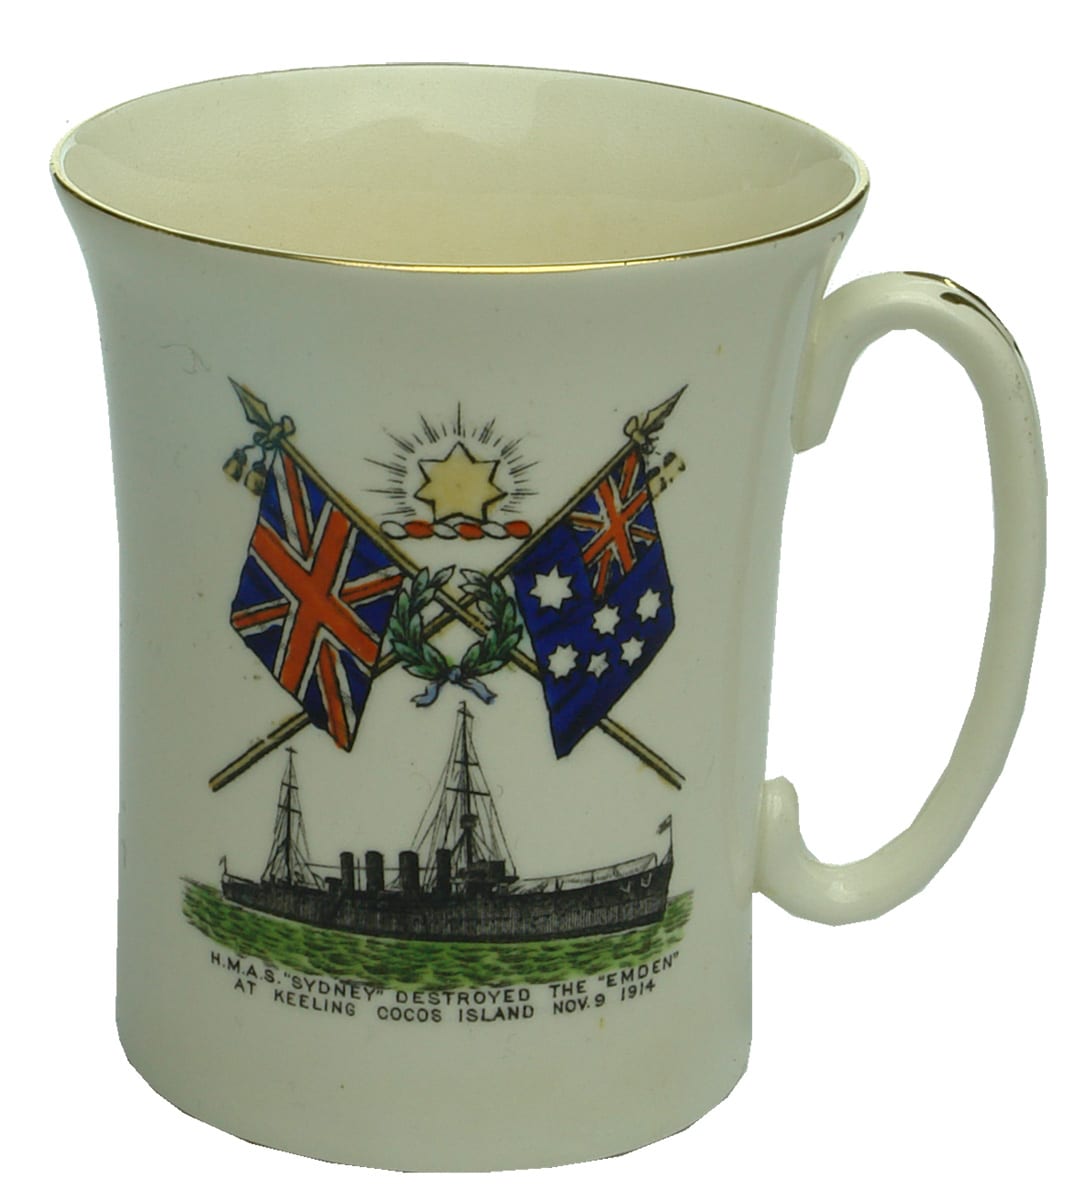 HMAS Sydney Emden Commemorative Mug